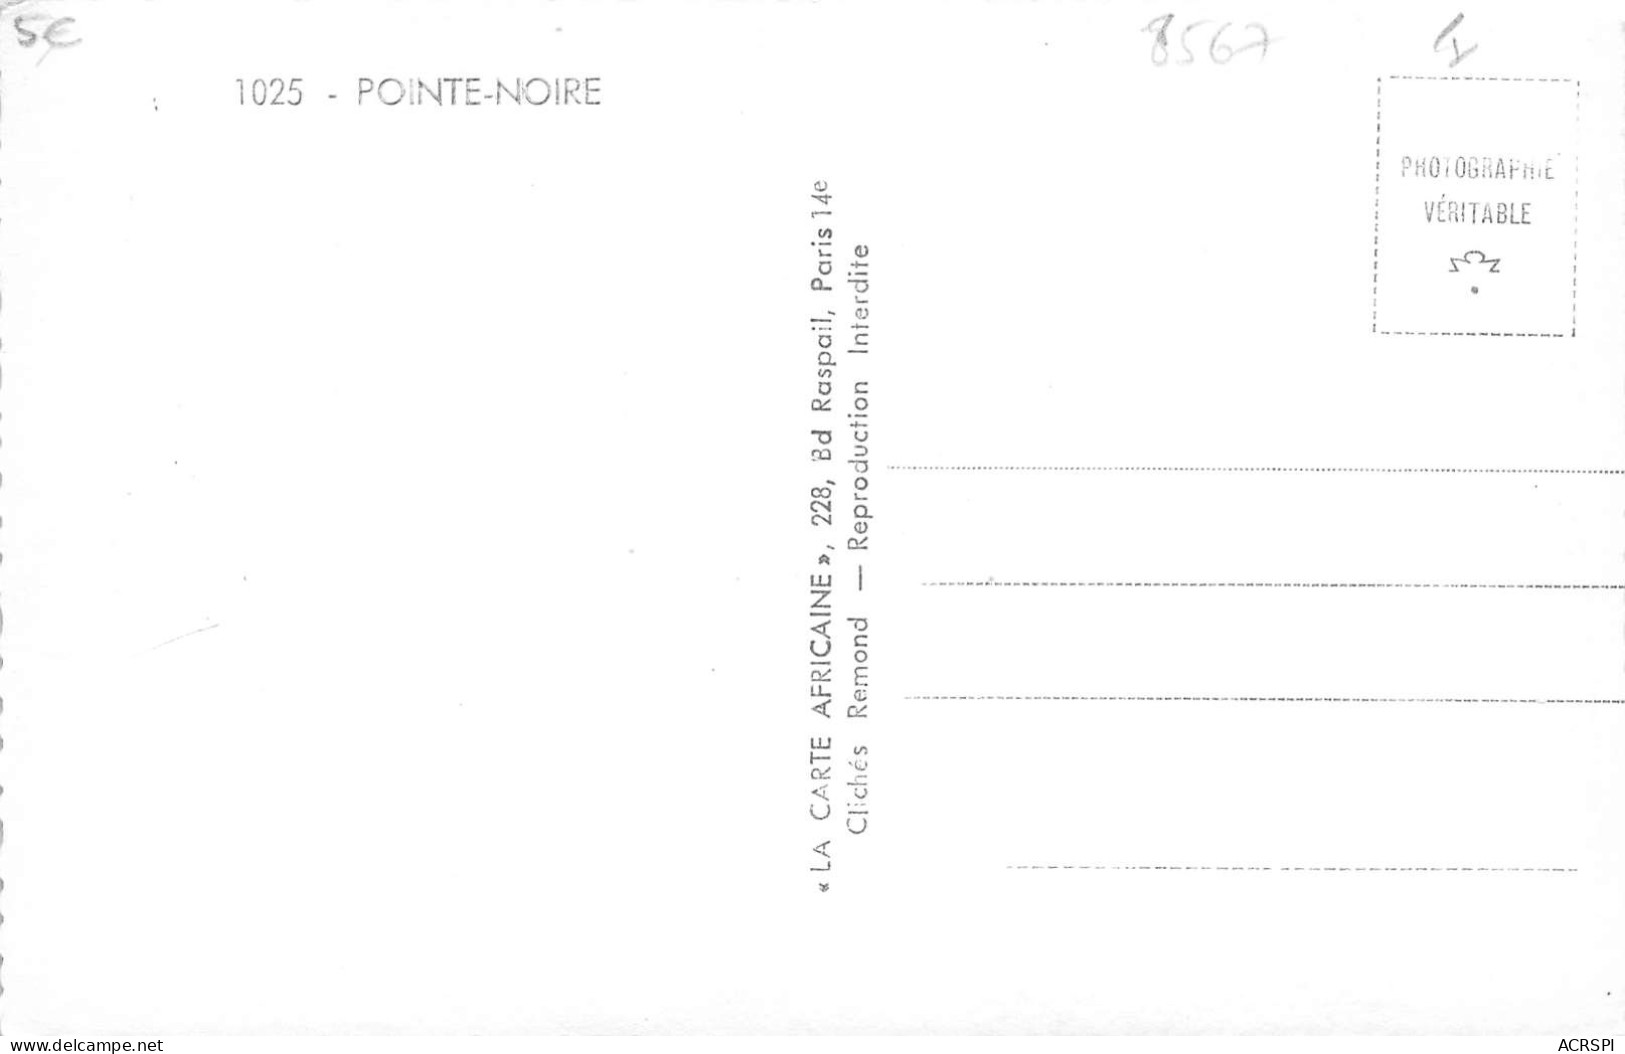 CONGO POINTE-NOIRE Magasin Sporafric Rond Point Kassai édition Remond (Scan R/V) N° 29 \MP7125 - Pointe-Noire